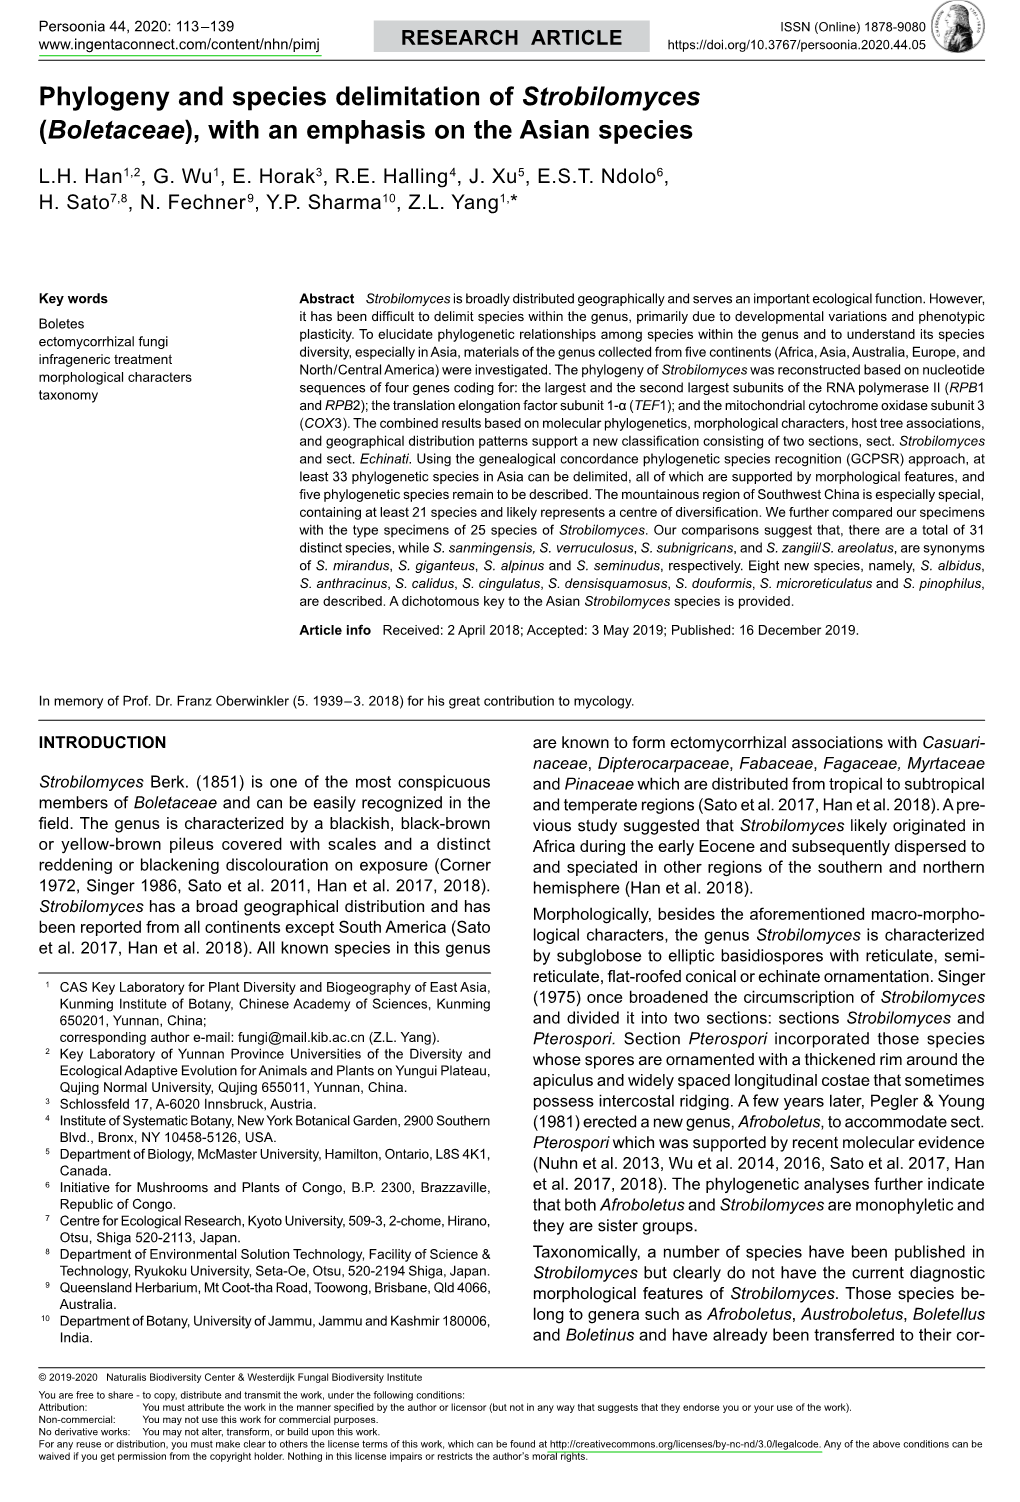 Phylogeny and Species Delimitation of &lt;I&gt;Strobilomyces